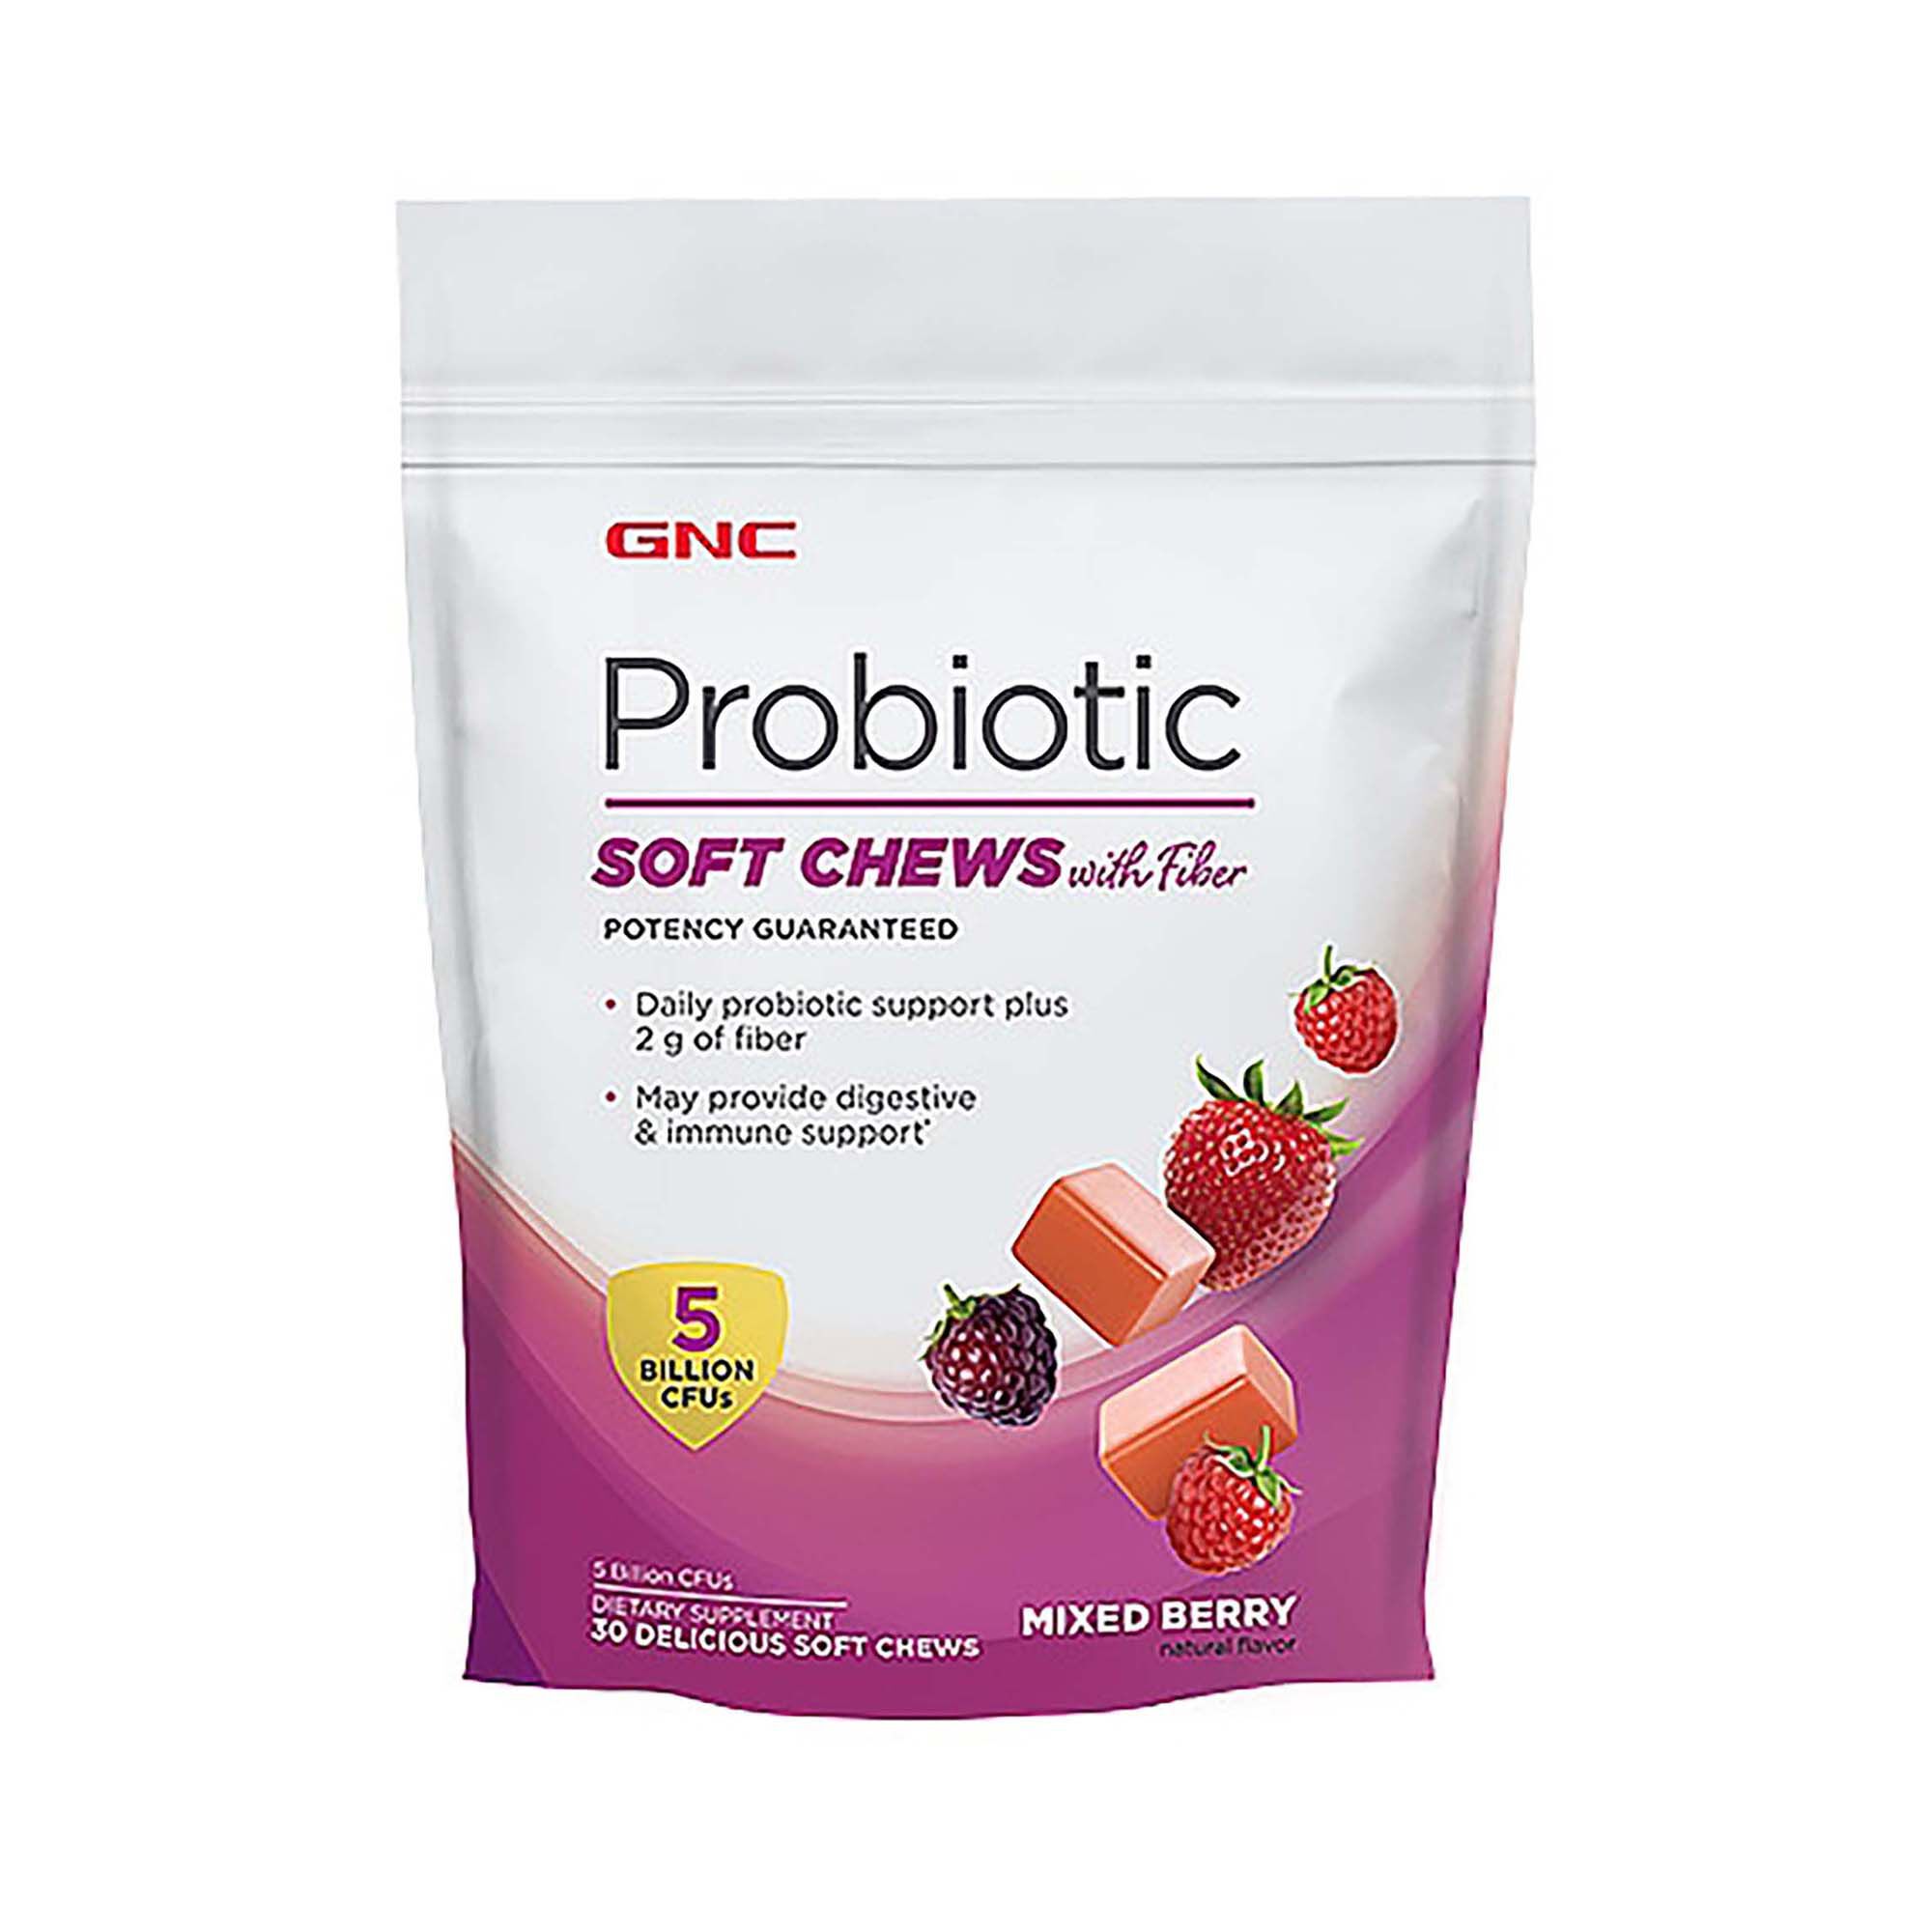 GNC Probiotic Soft Chews with Fiber 